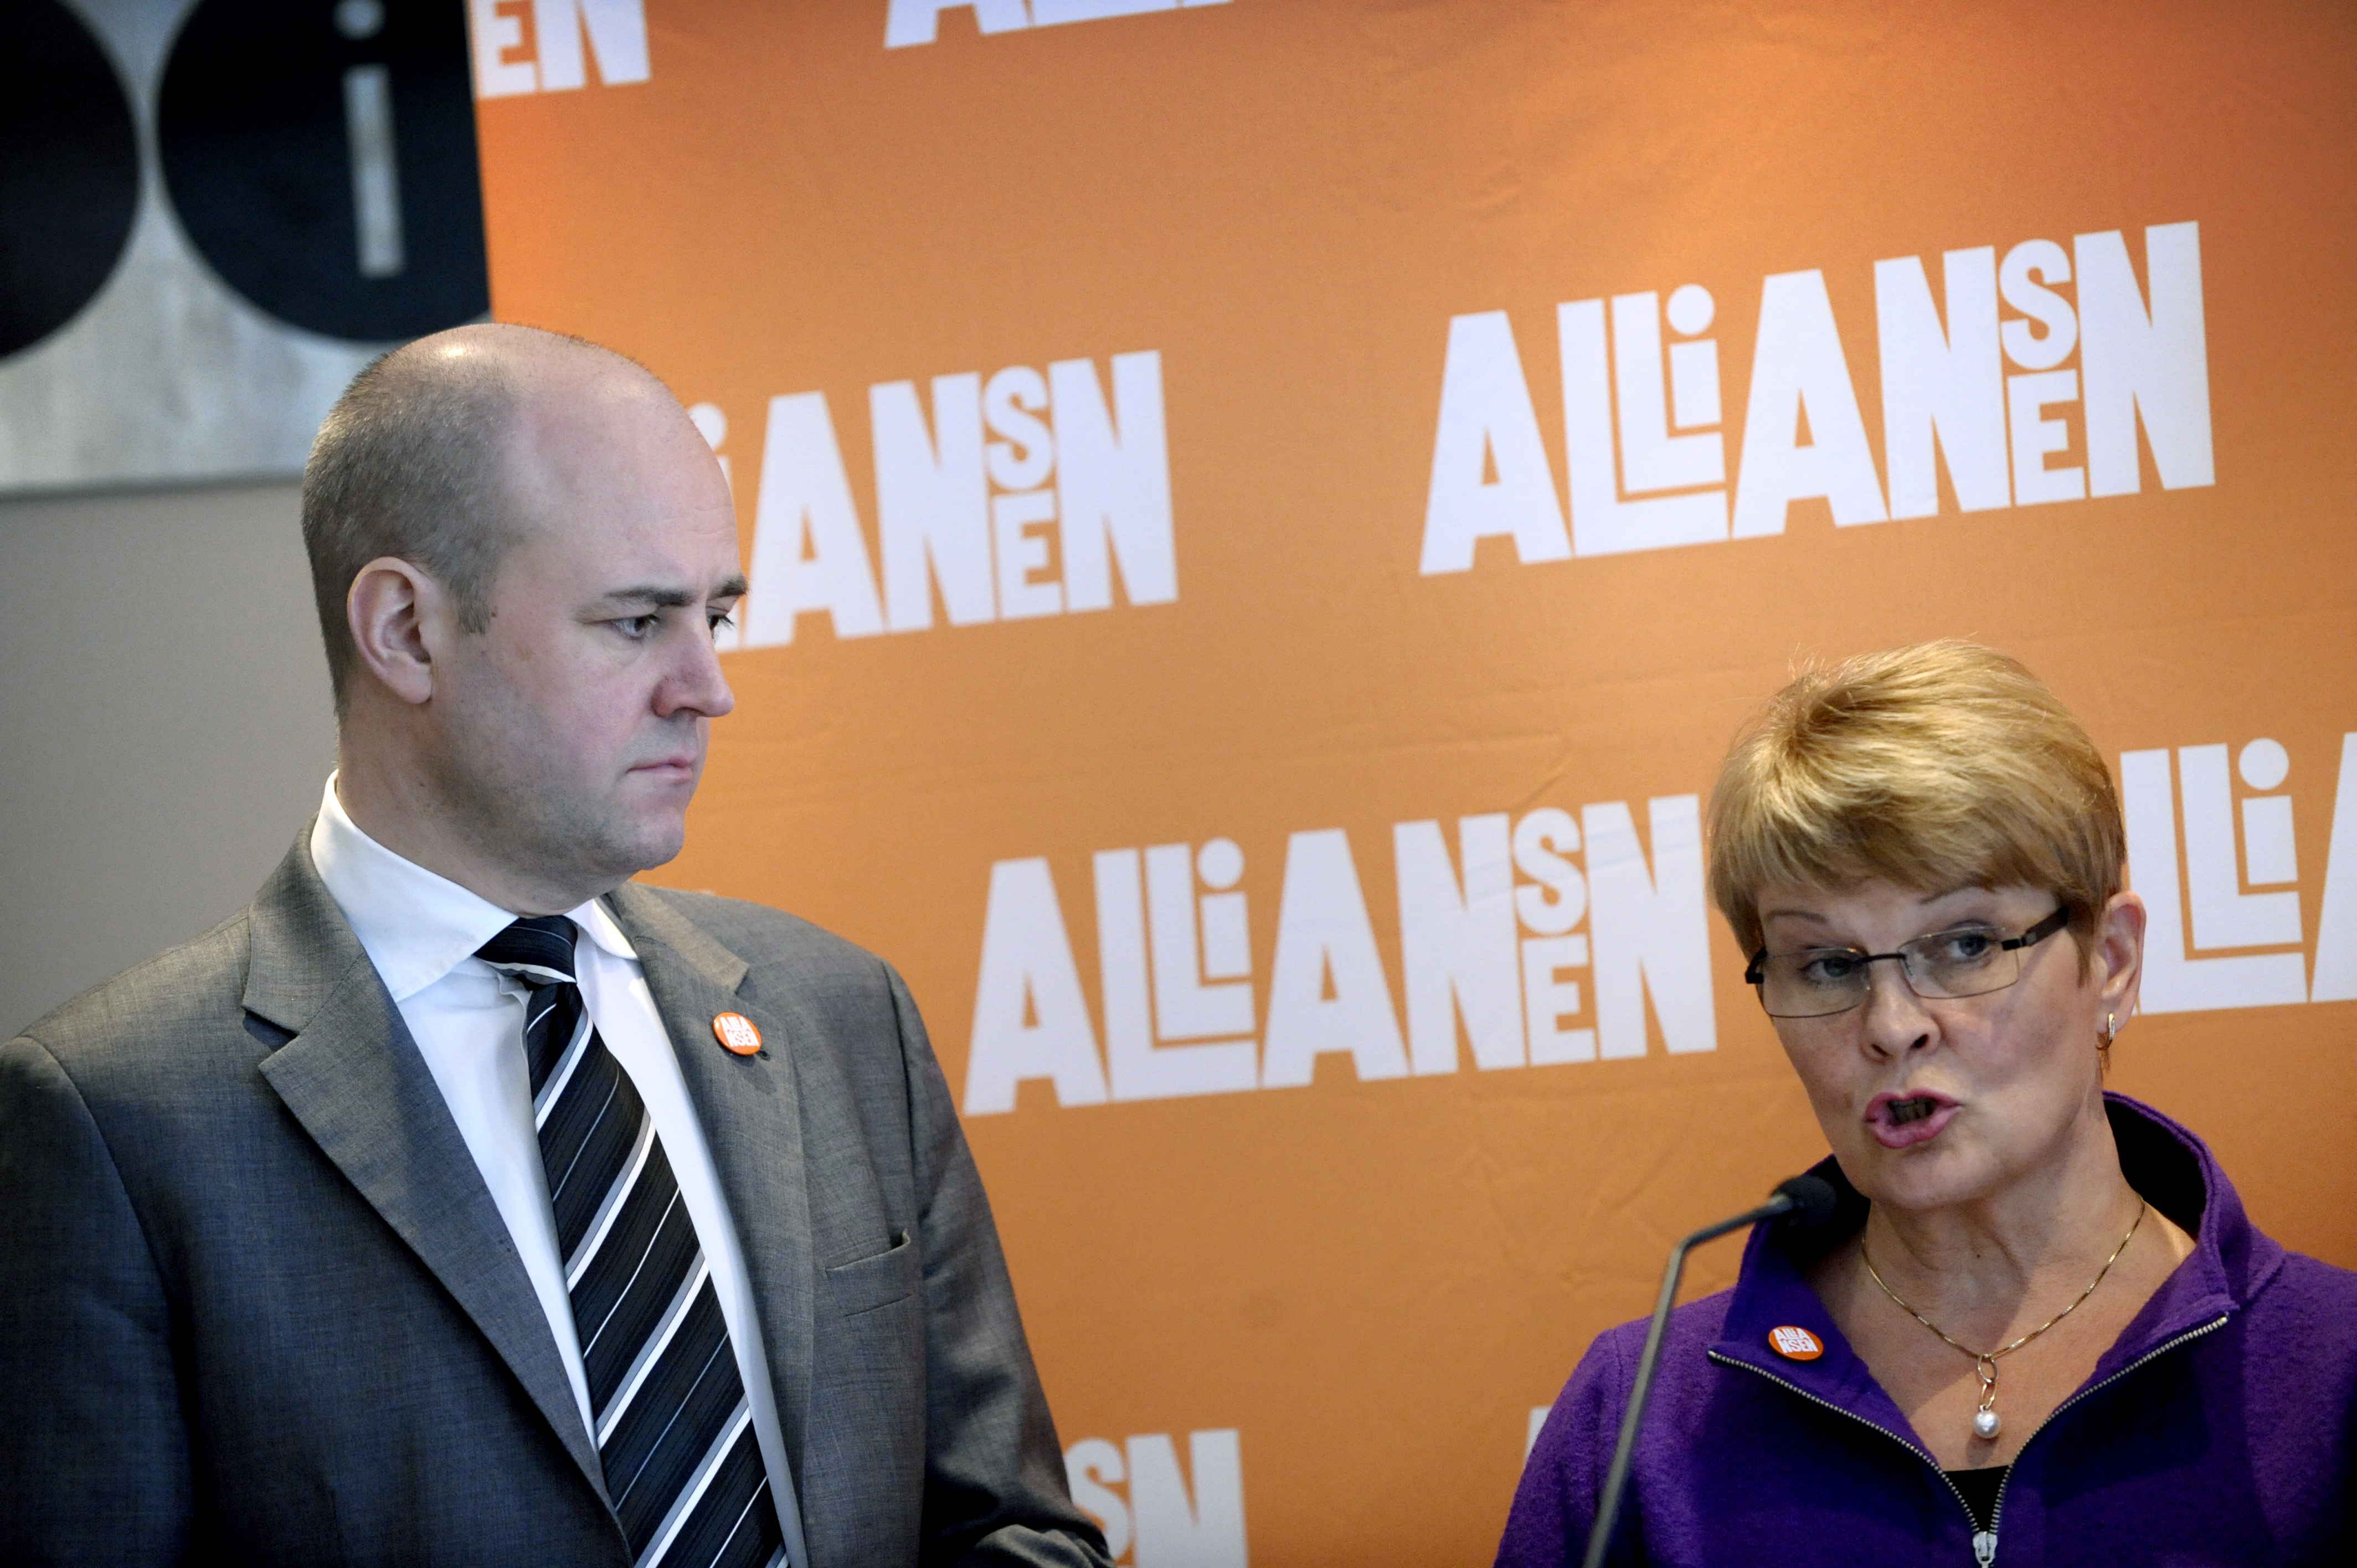 Riksdagsvalet 2010, Centerpartiet, Alliansen, Maud Olofsson, Moderaterna, Regeringen, Fredrik Reinfeldt